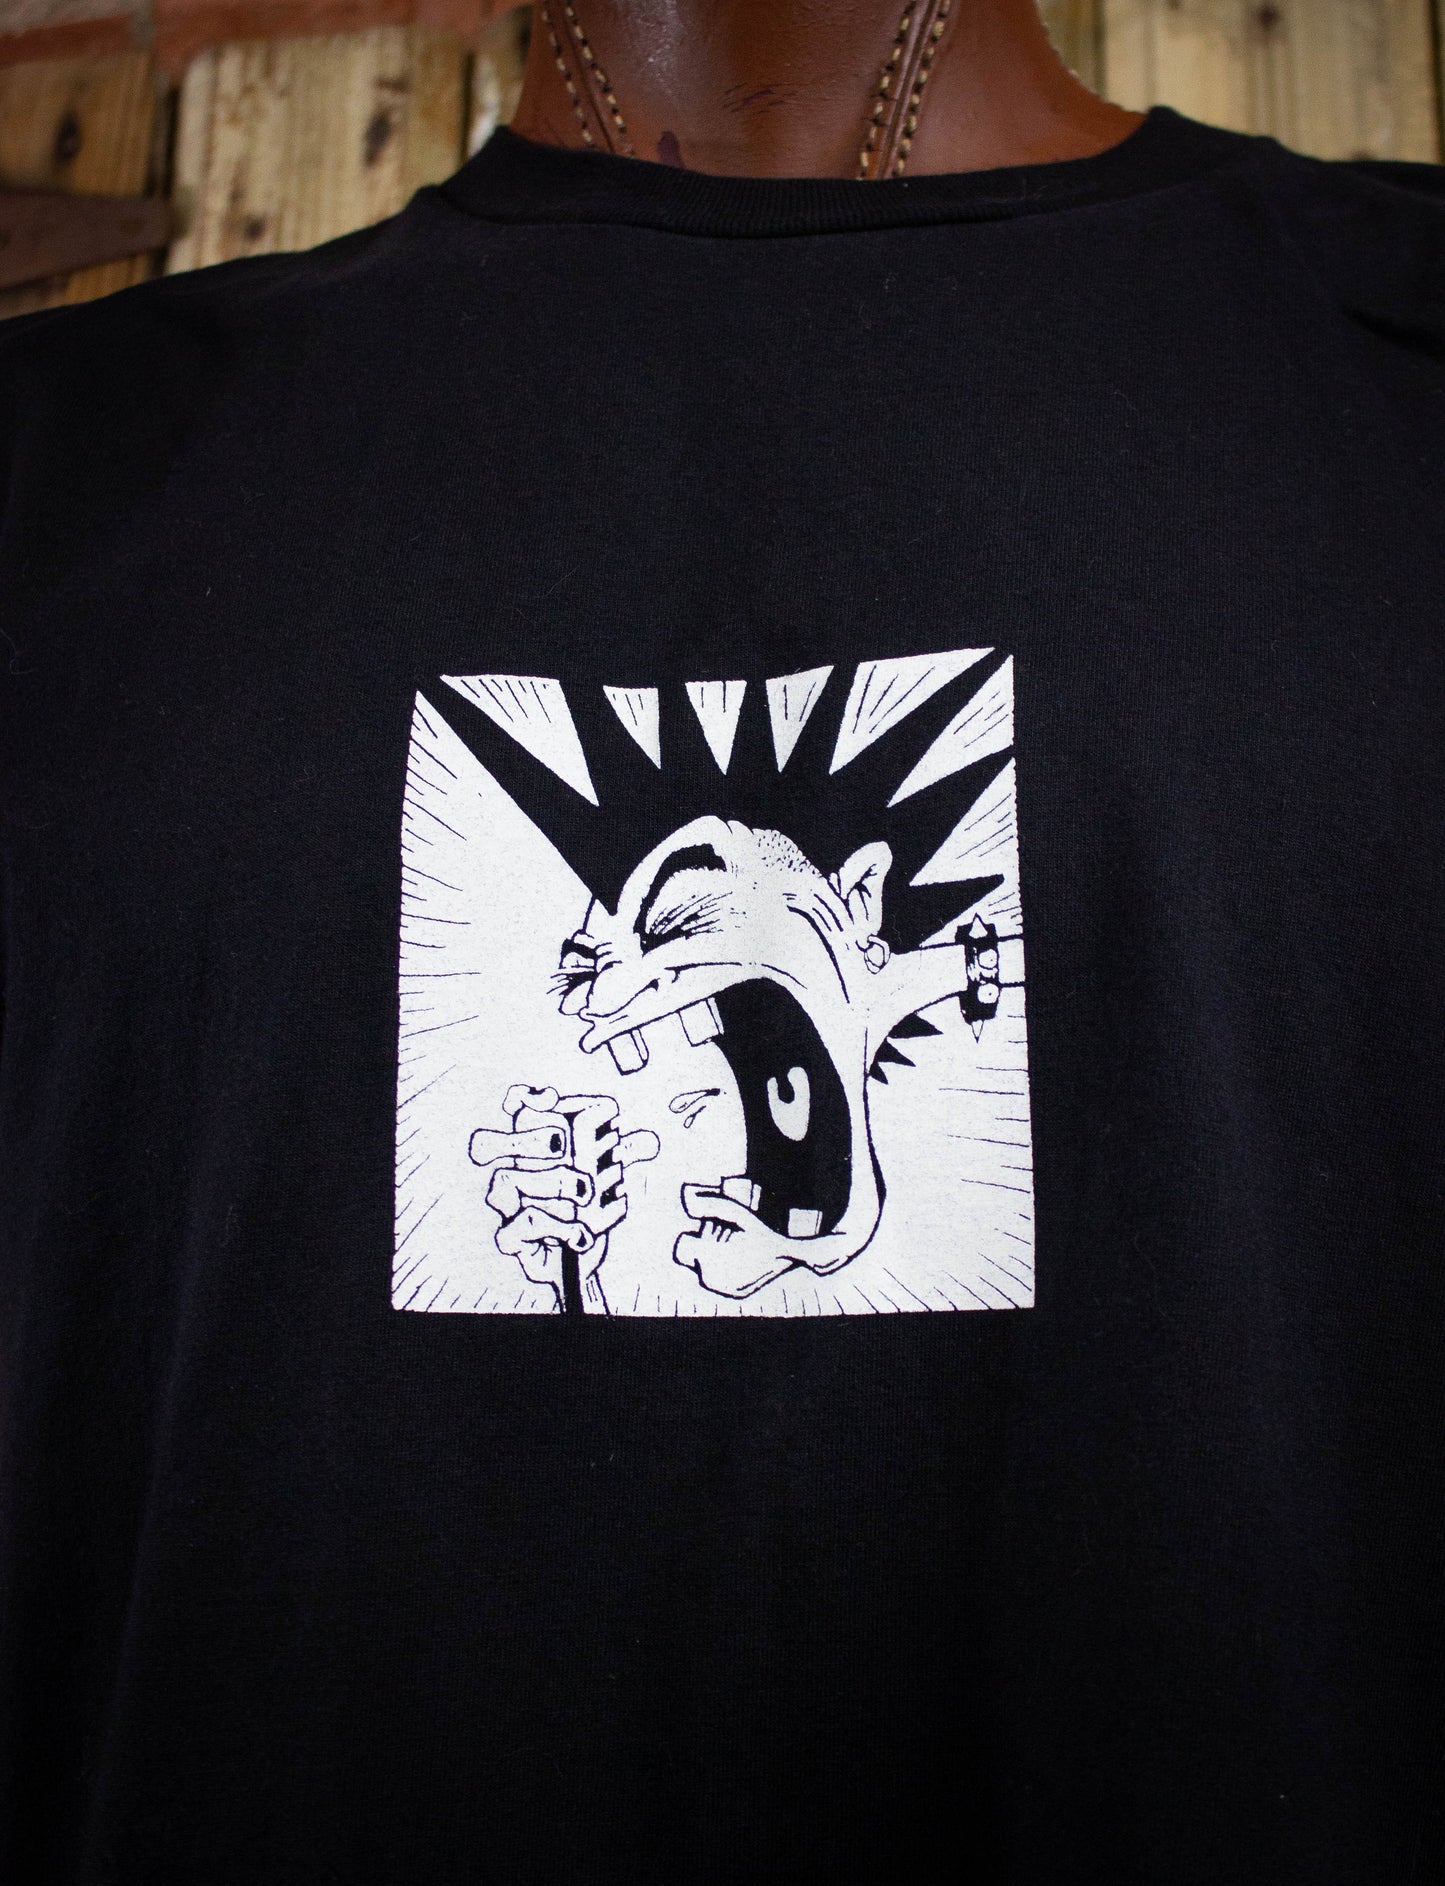 Vintage Rancid Punk Singer Logo Concert T Shirt 90s Black XL